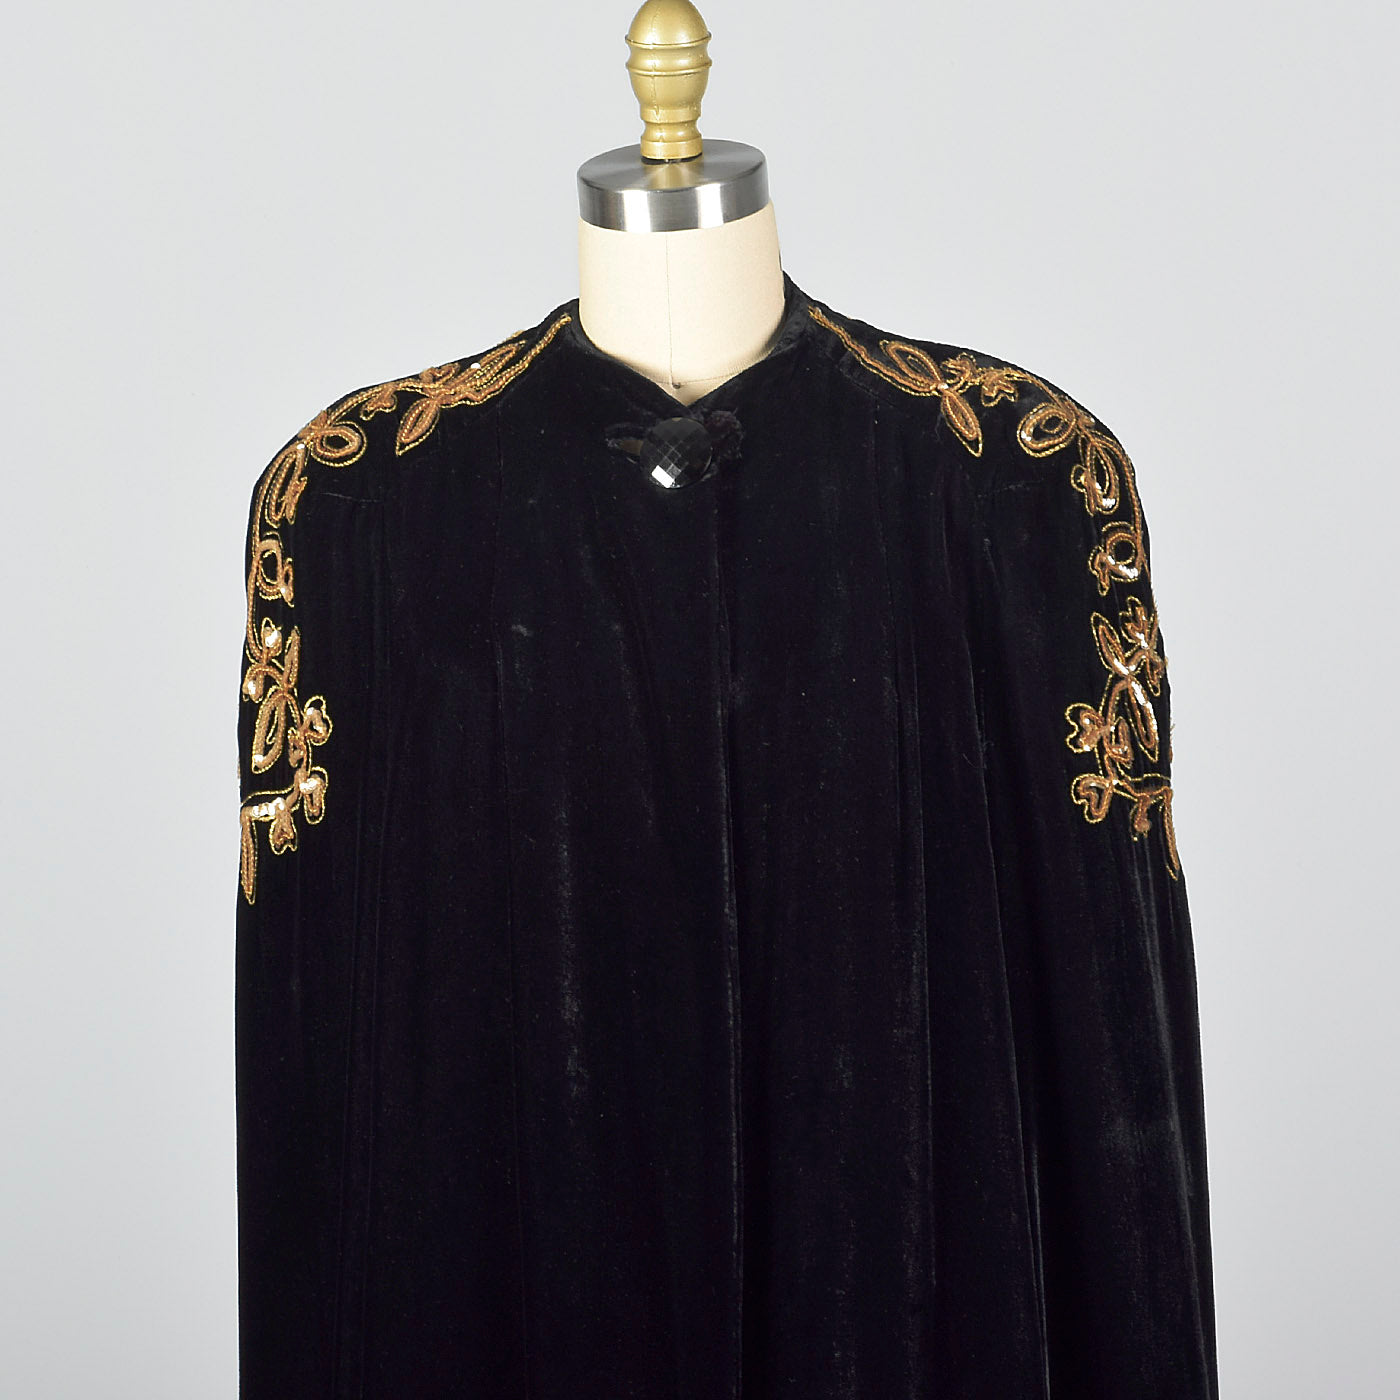 1940s Black Velvet Opera Cape with Gold Sequin Shoulders